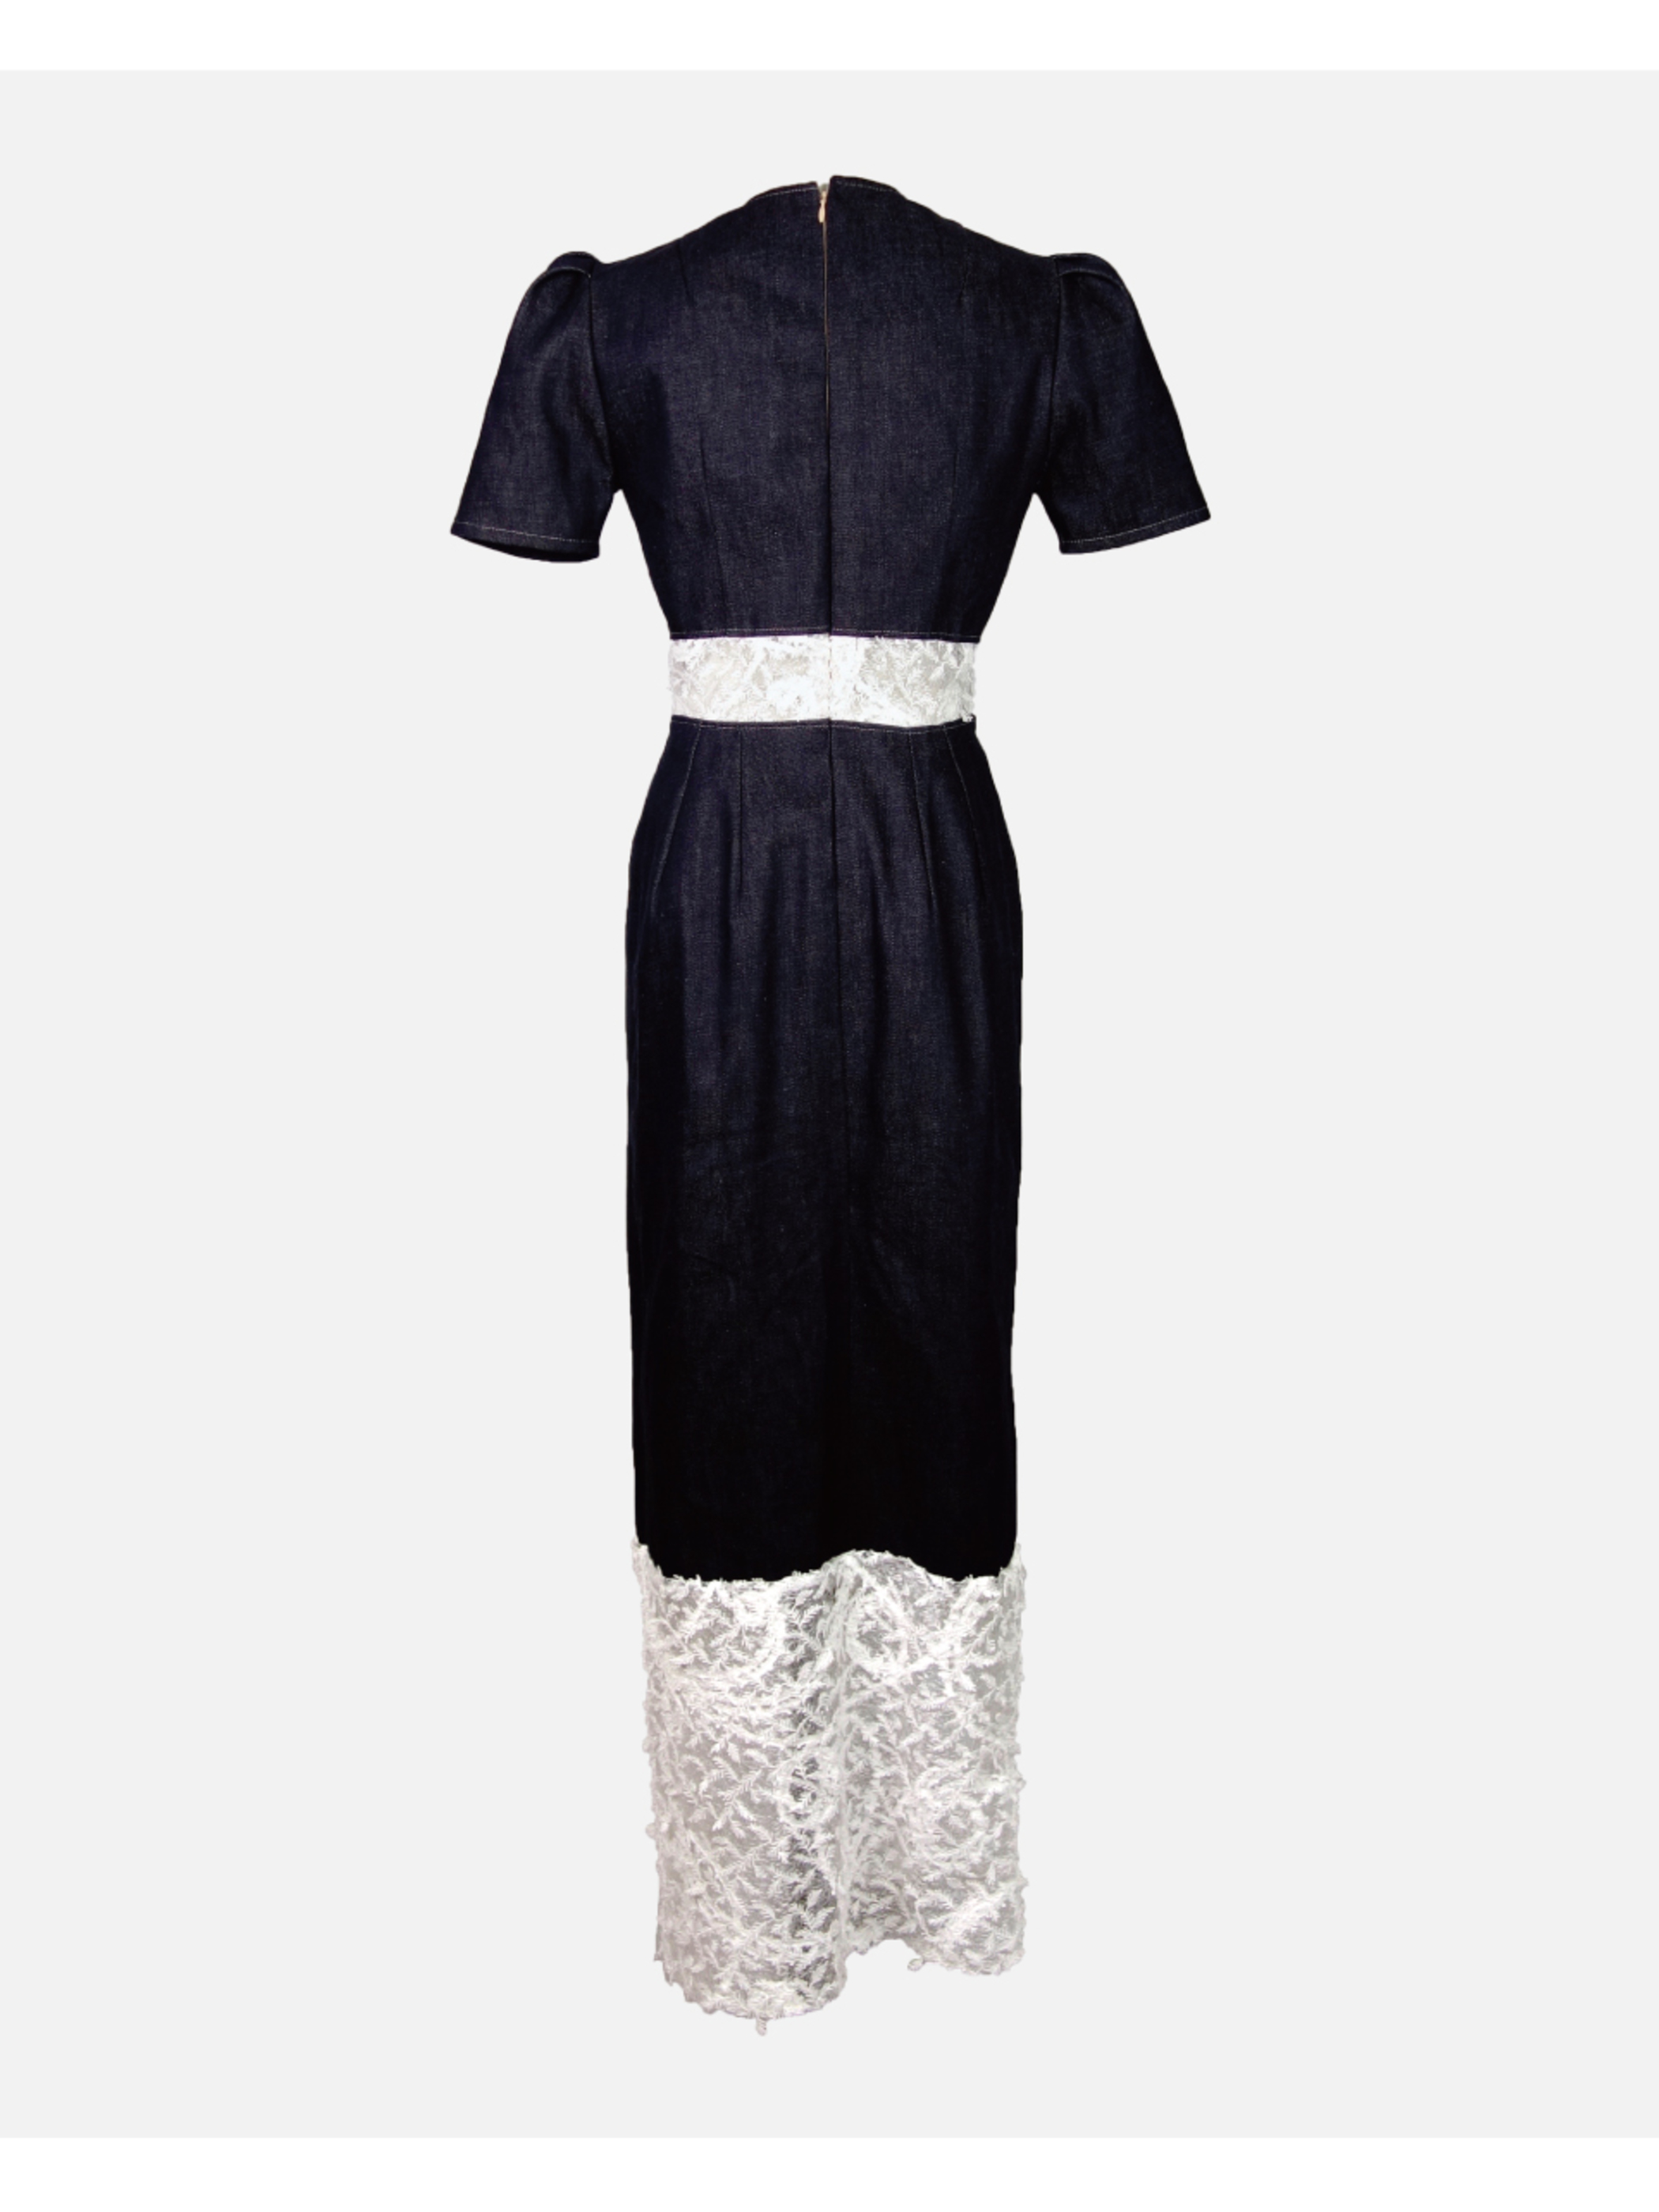 Denim dress with spangled leaf lace